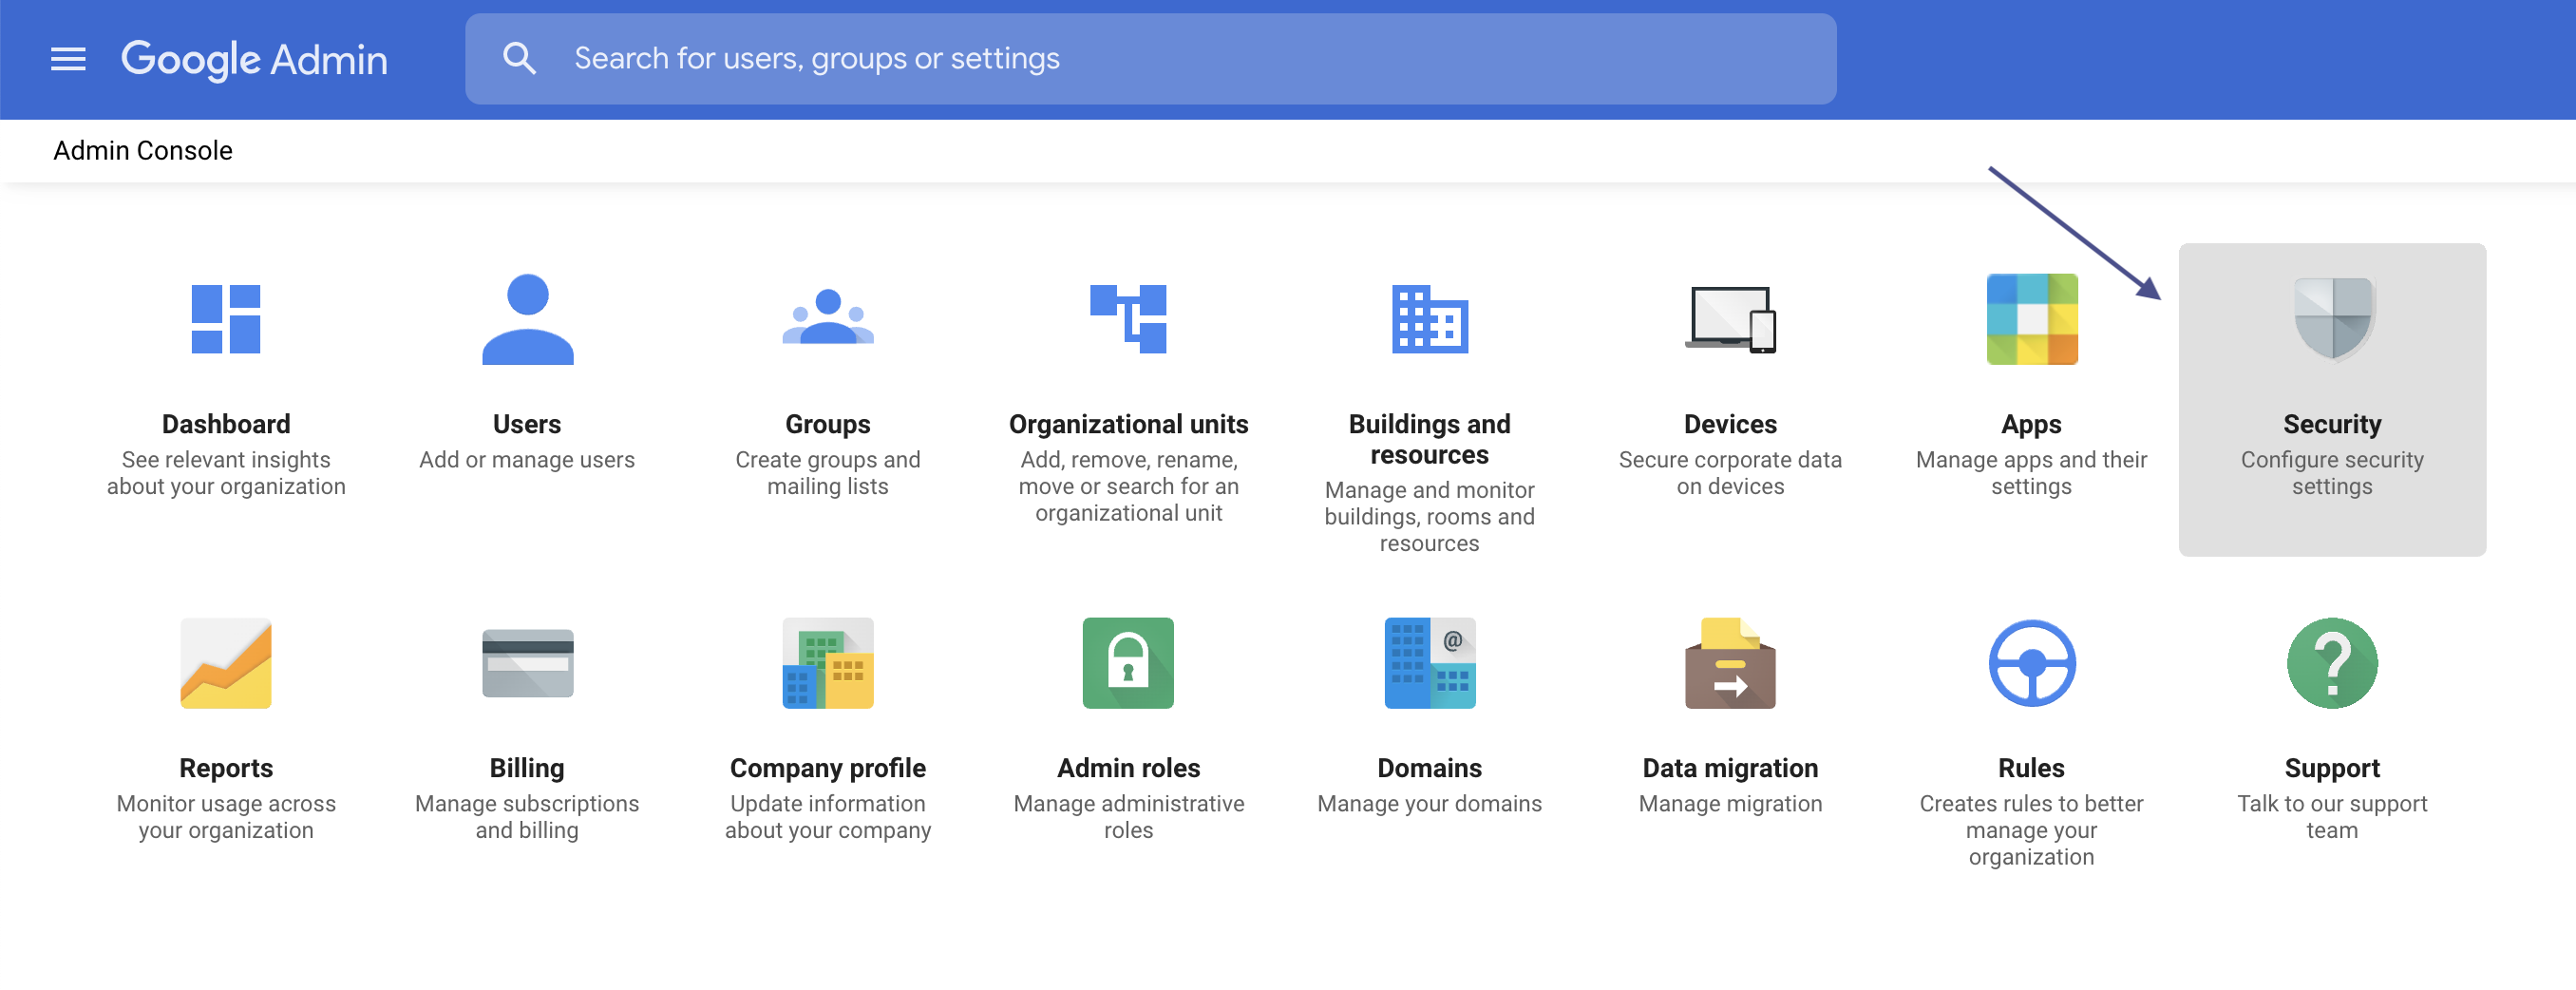 Google_Admin_dashboard.png